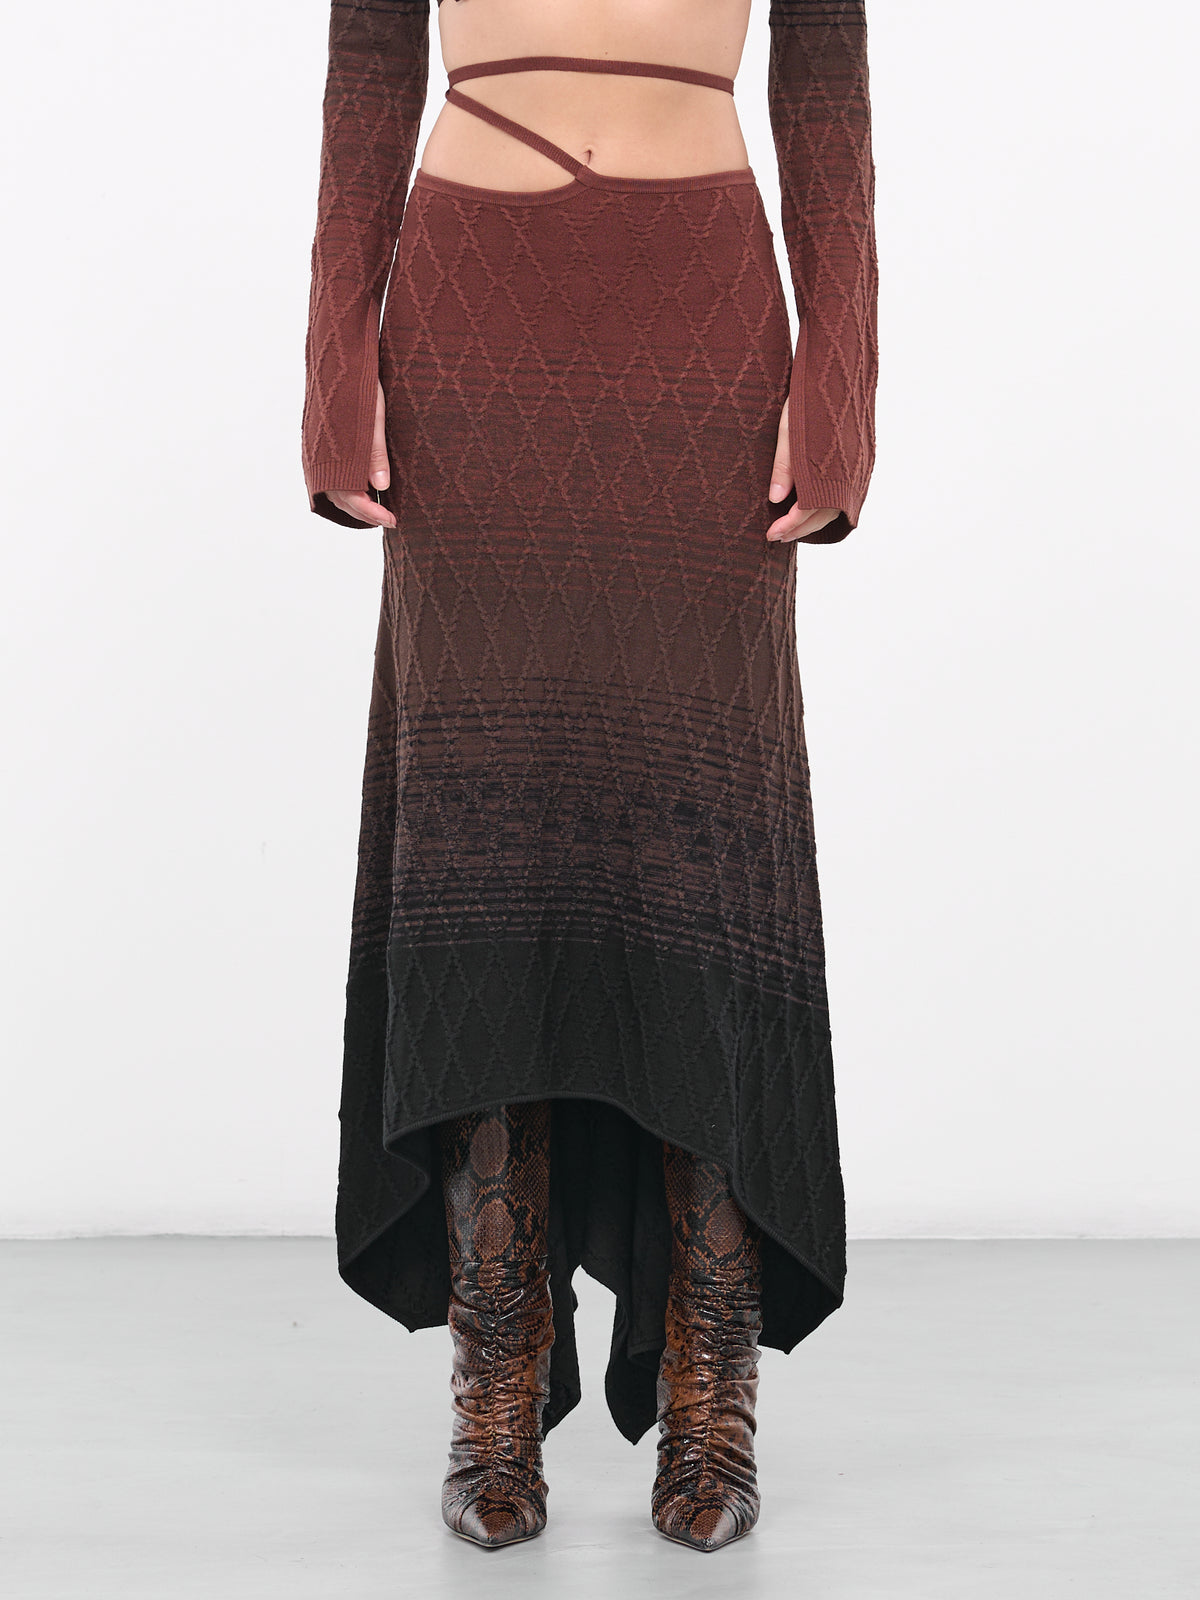 Salem Skirt (999-902-O-BROWN-BLACK)